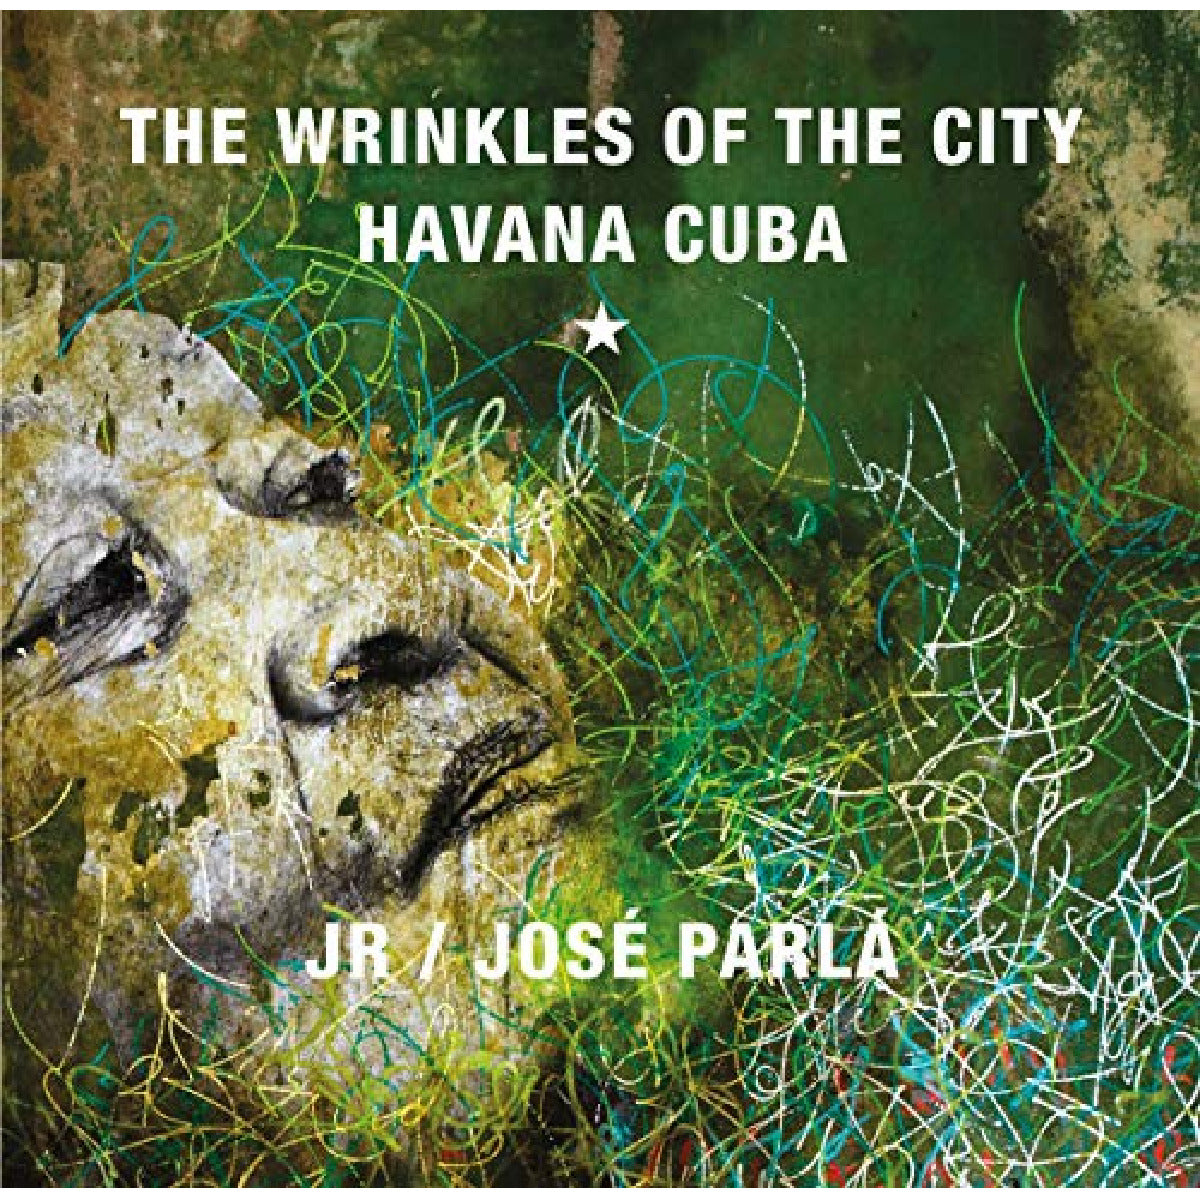 JR & Jose Parla: The Wrinkles of the City Havana Cuba